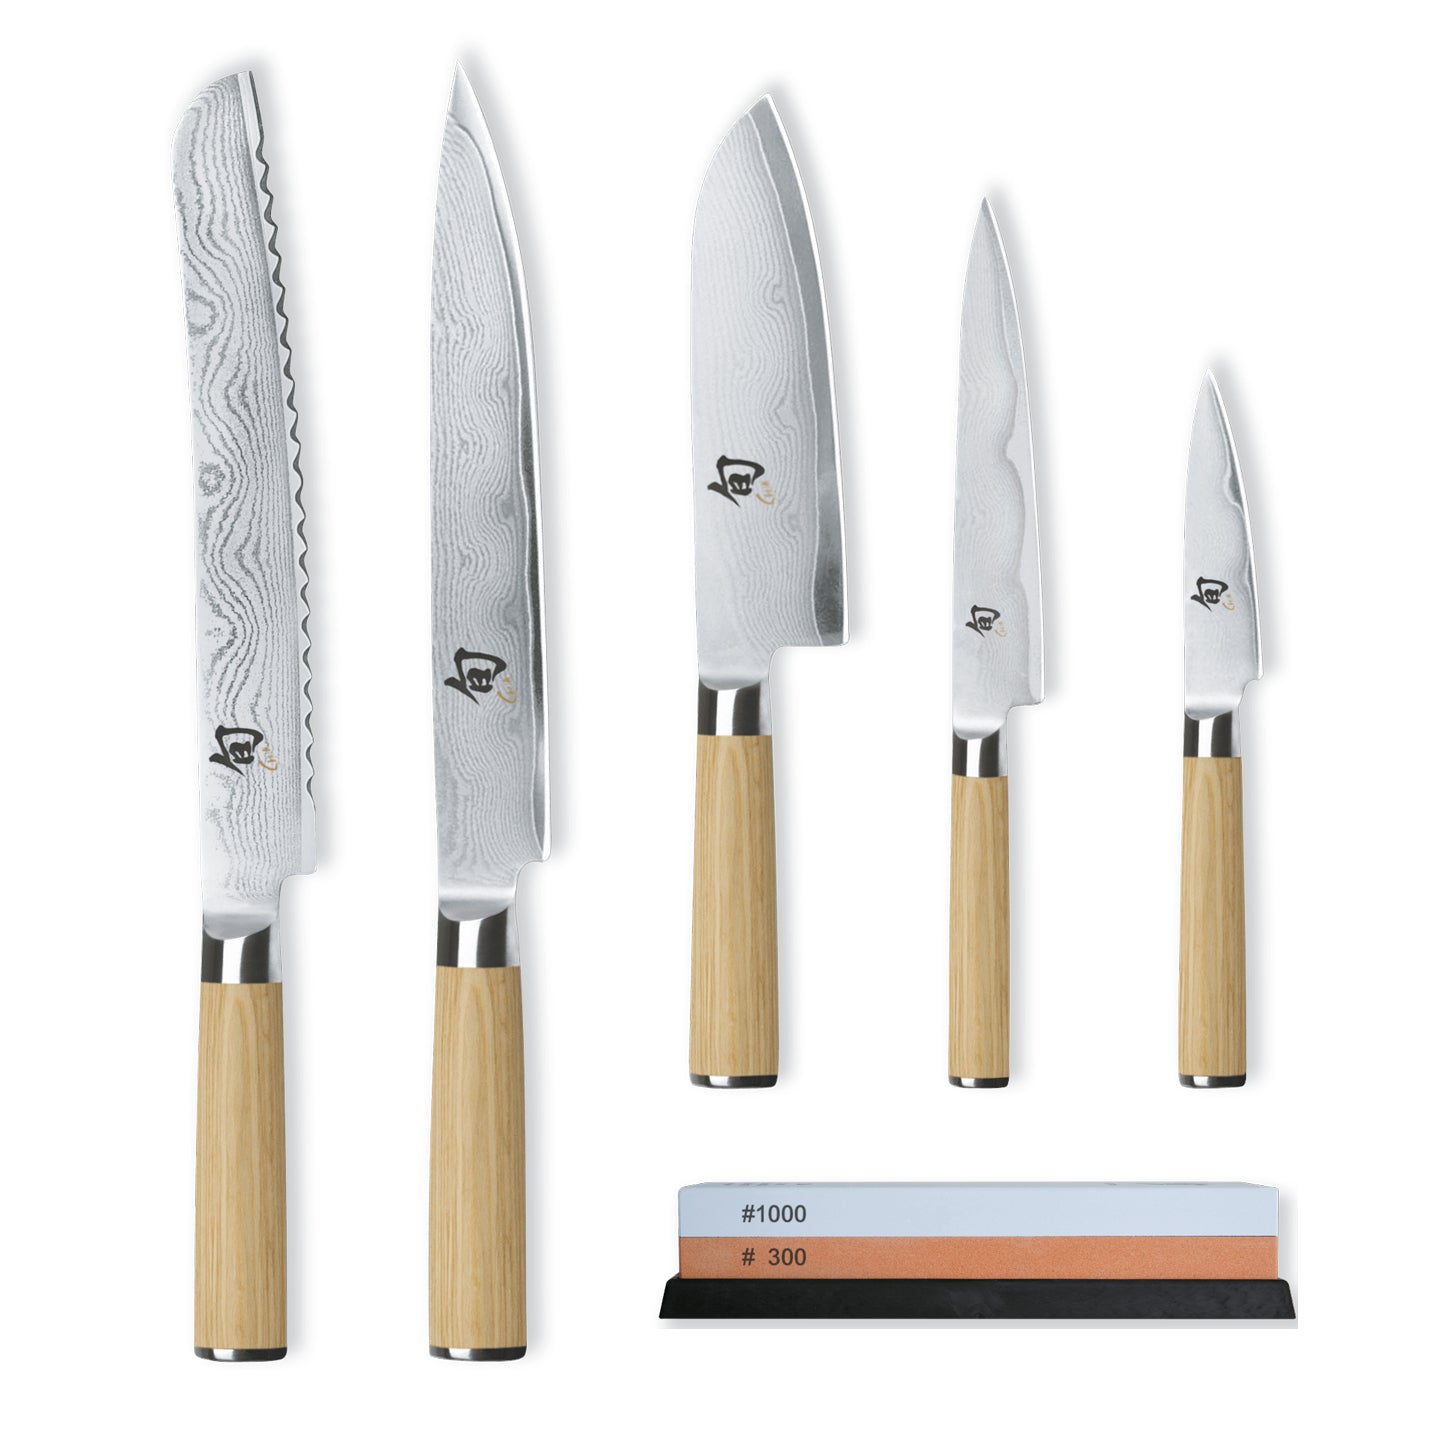 Kai Shun Classic White 5 Knife and Whetstone Set